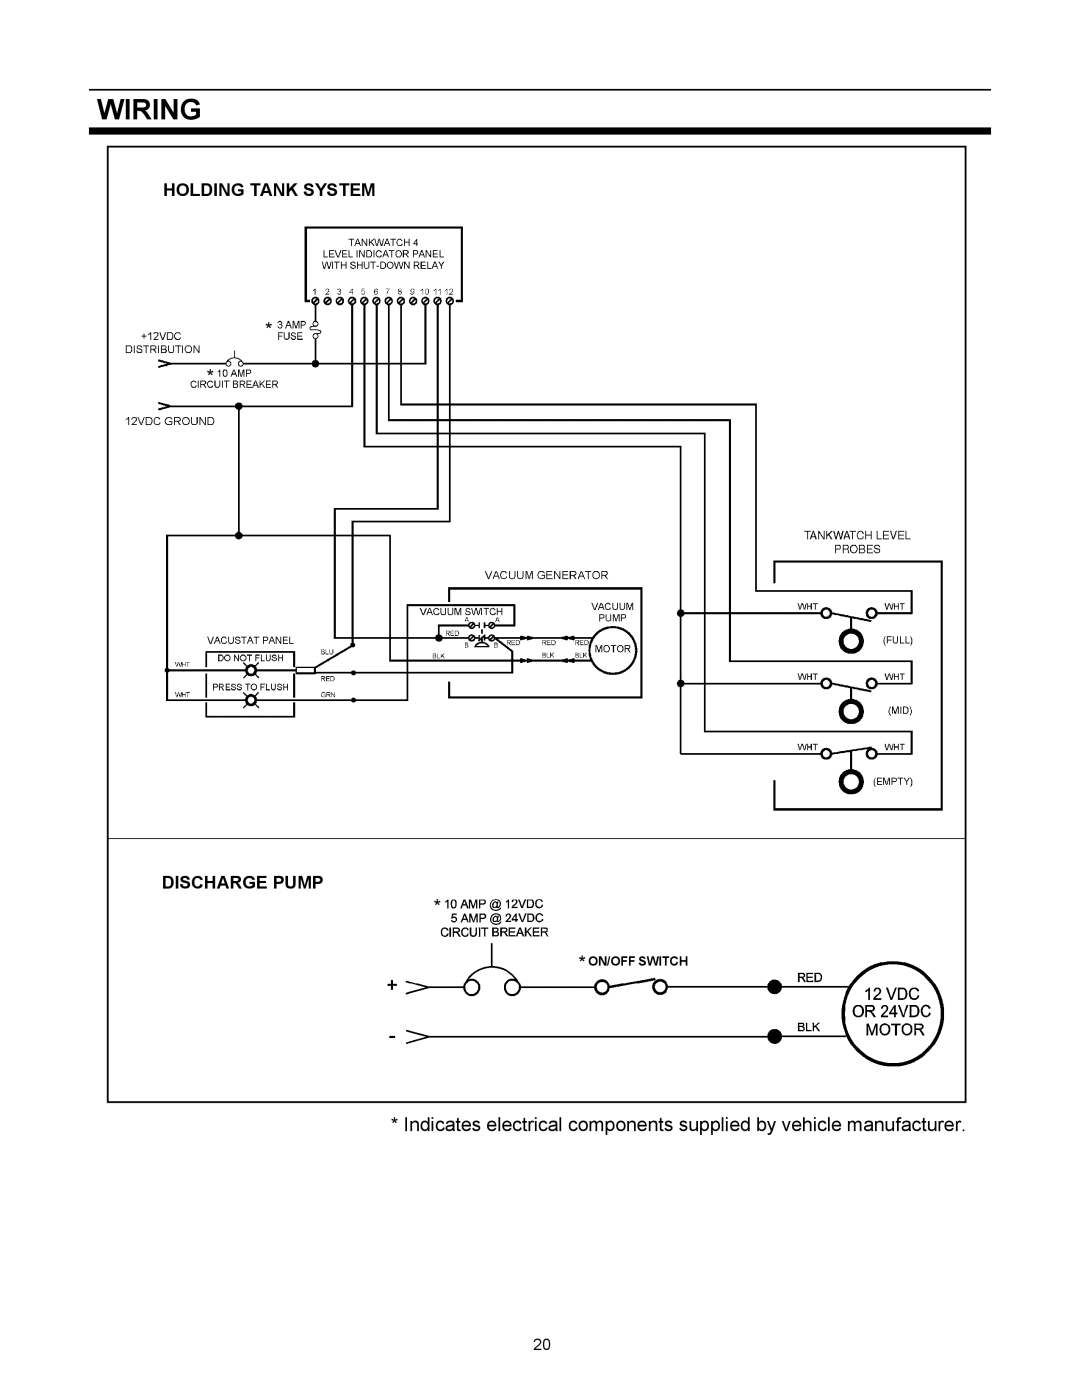 Dometic 1600, HTS-EC owner manual Wiring 